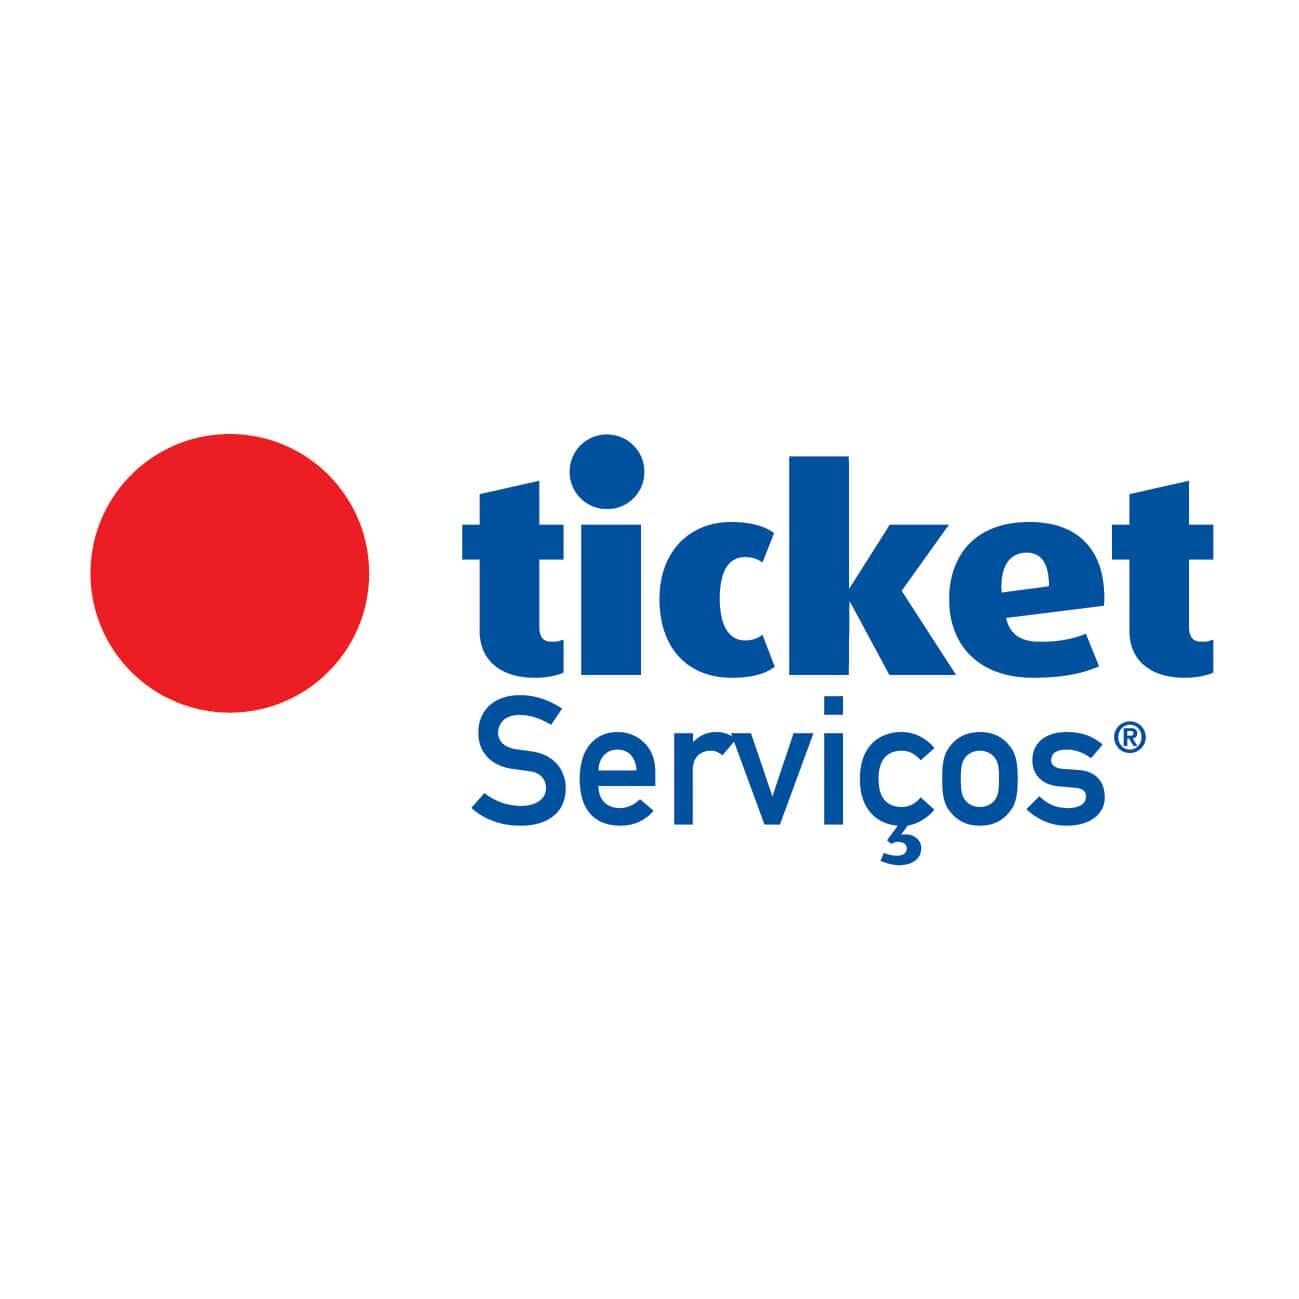 ticket serviços.jpg